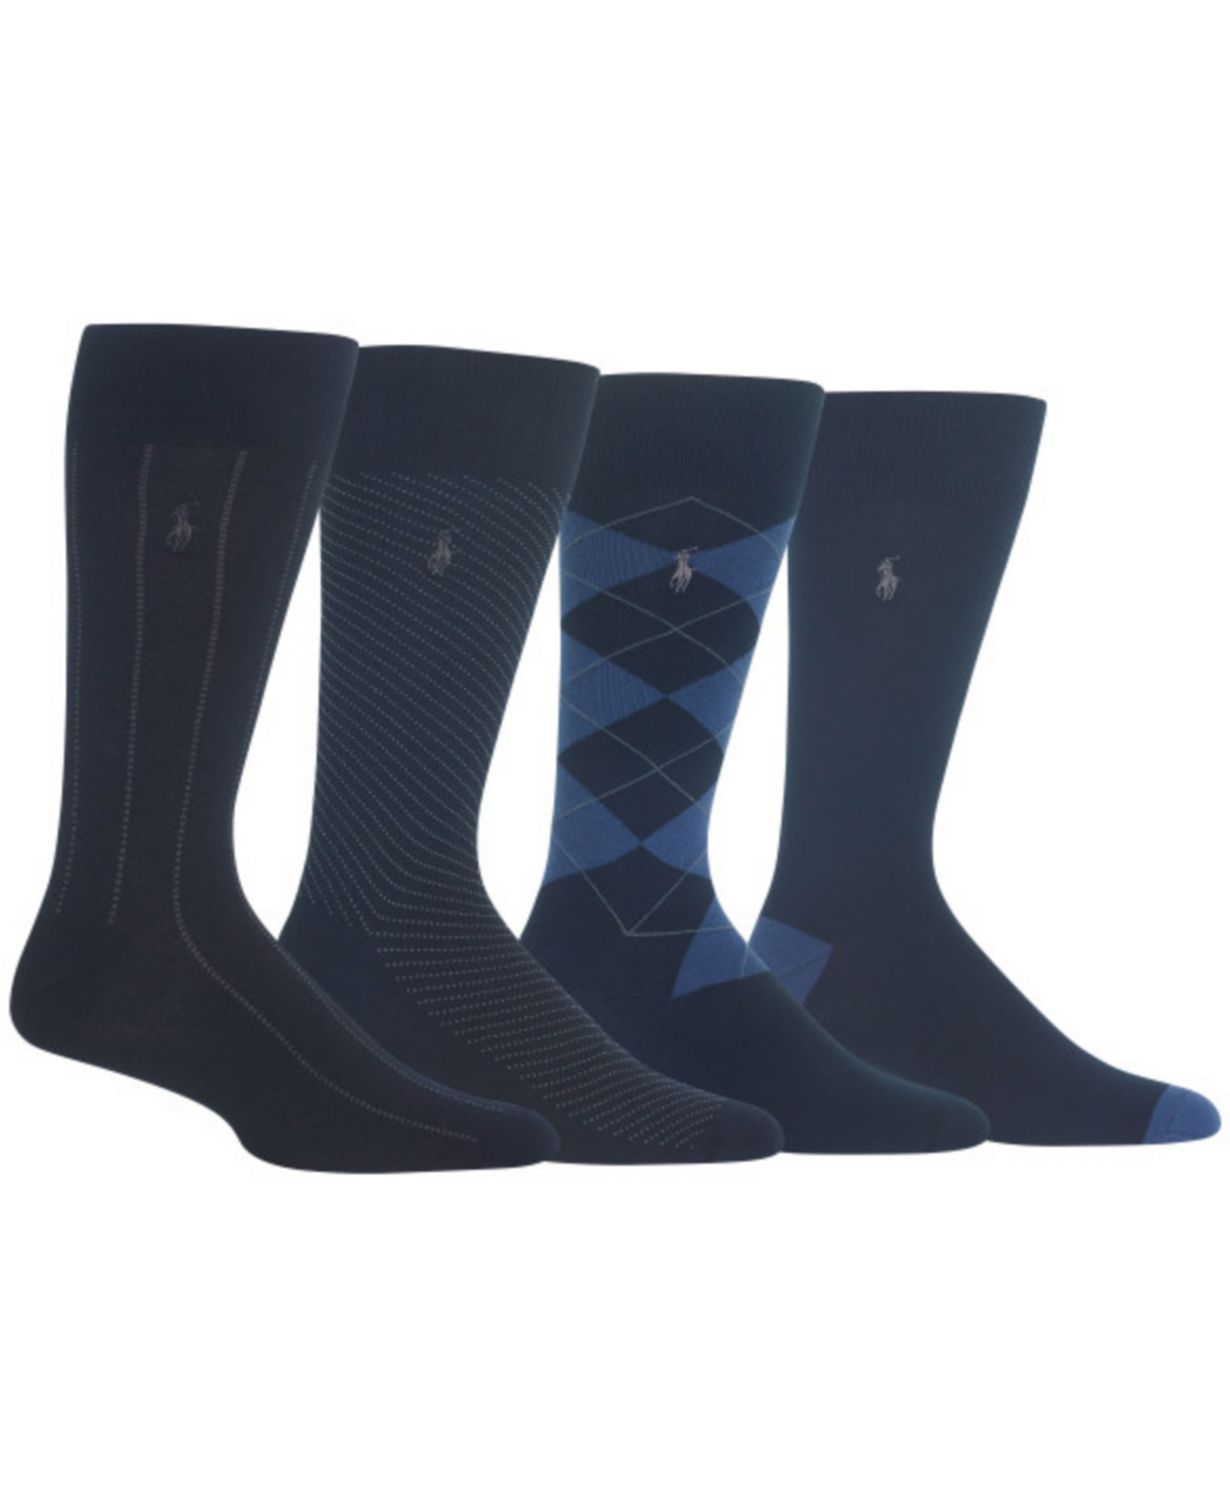 Polo Ralph Lauren Assorted Dress Socks 4-pack Navy